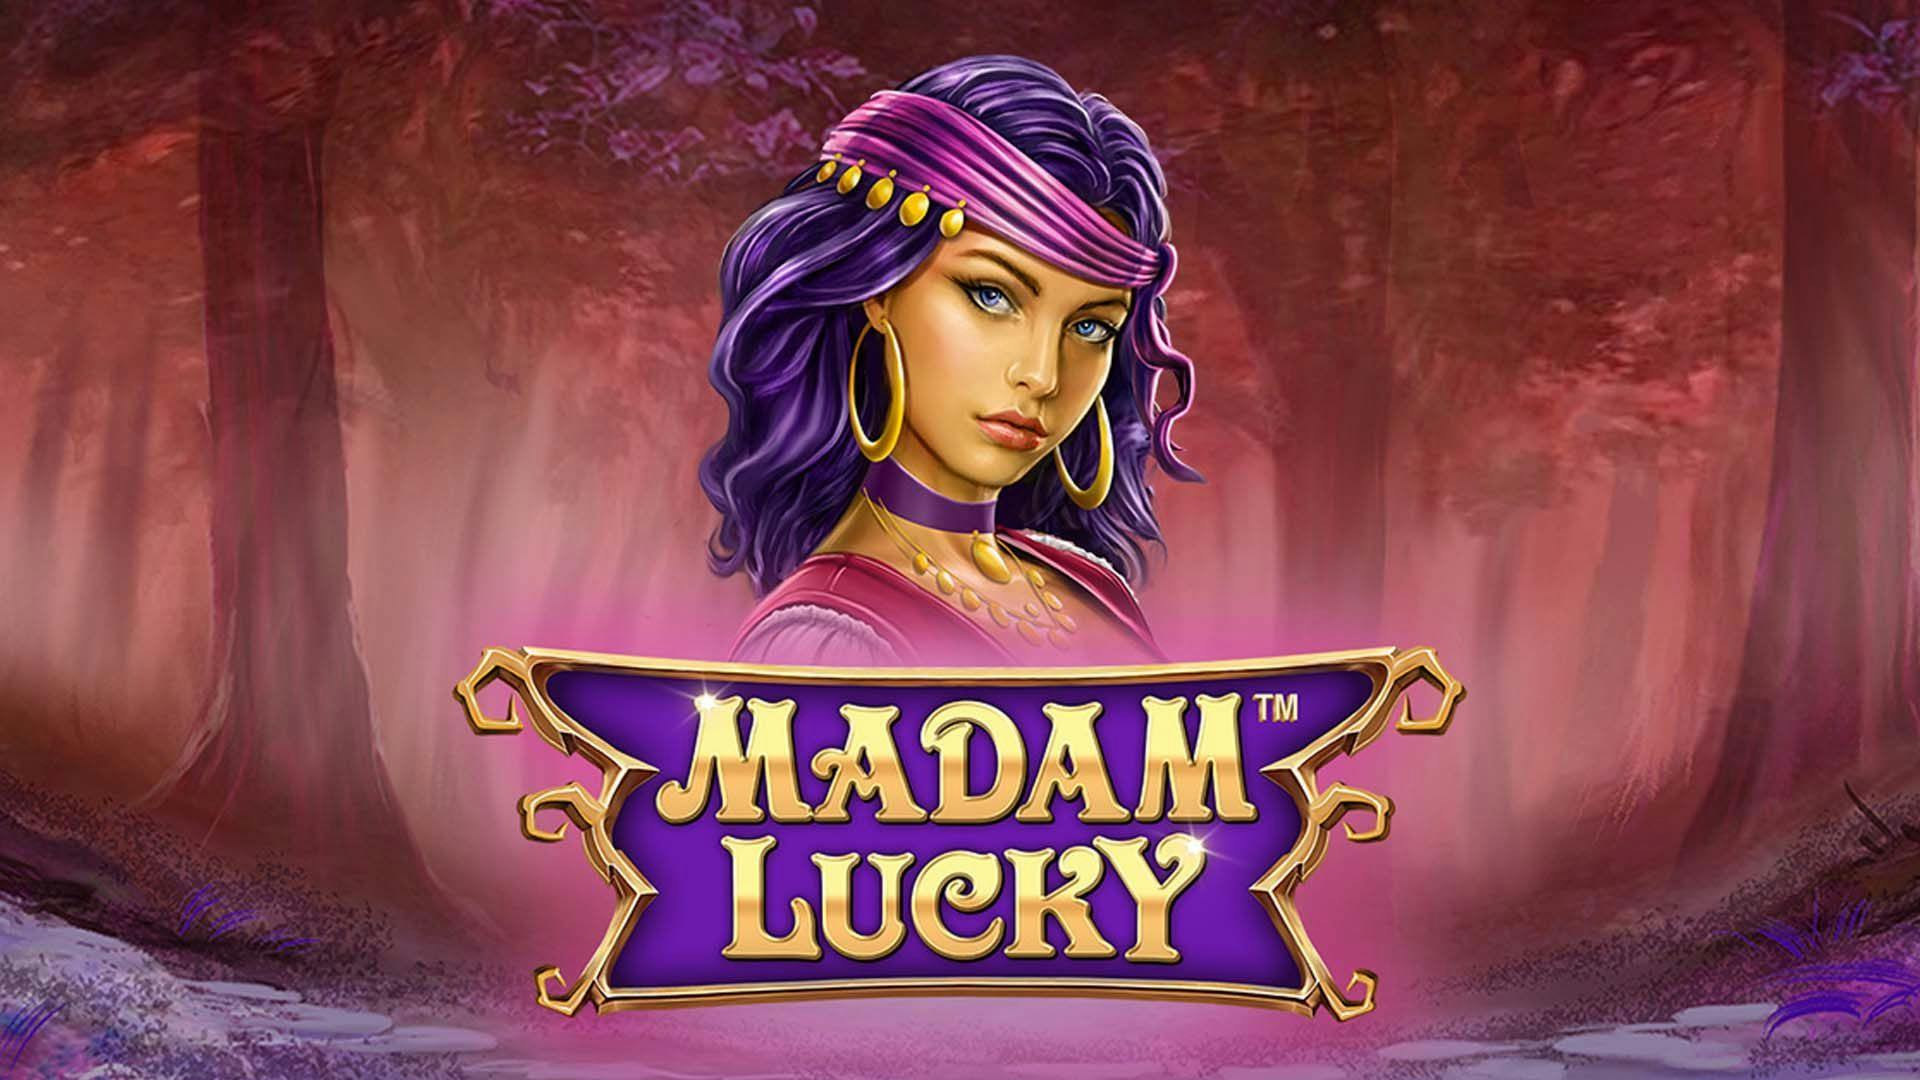 Madam Lucky Slot Machine Online Free Game Play